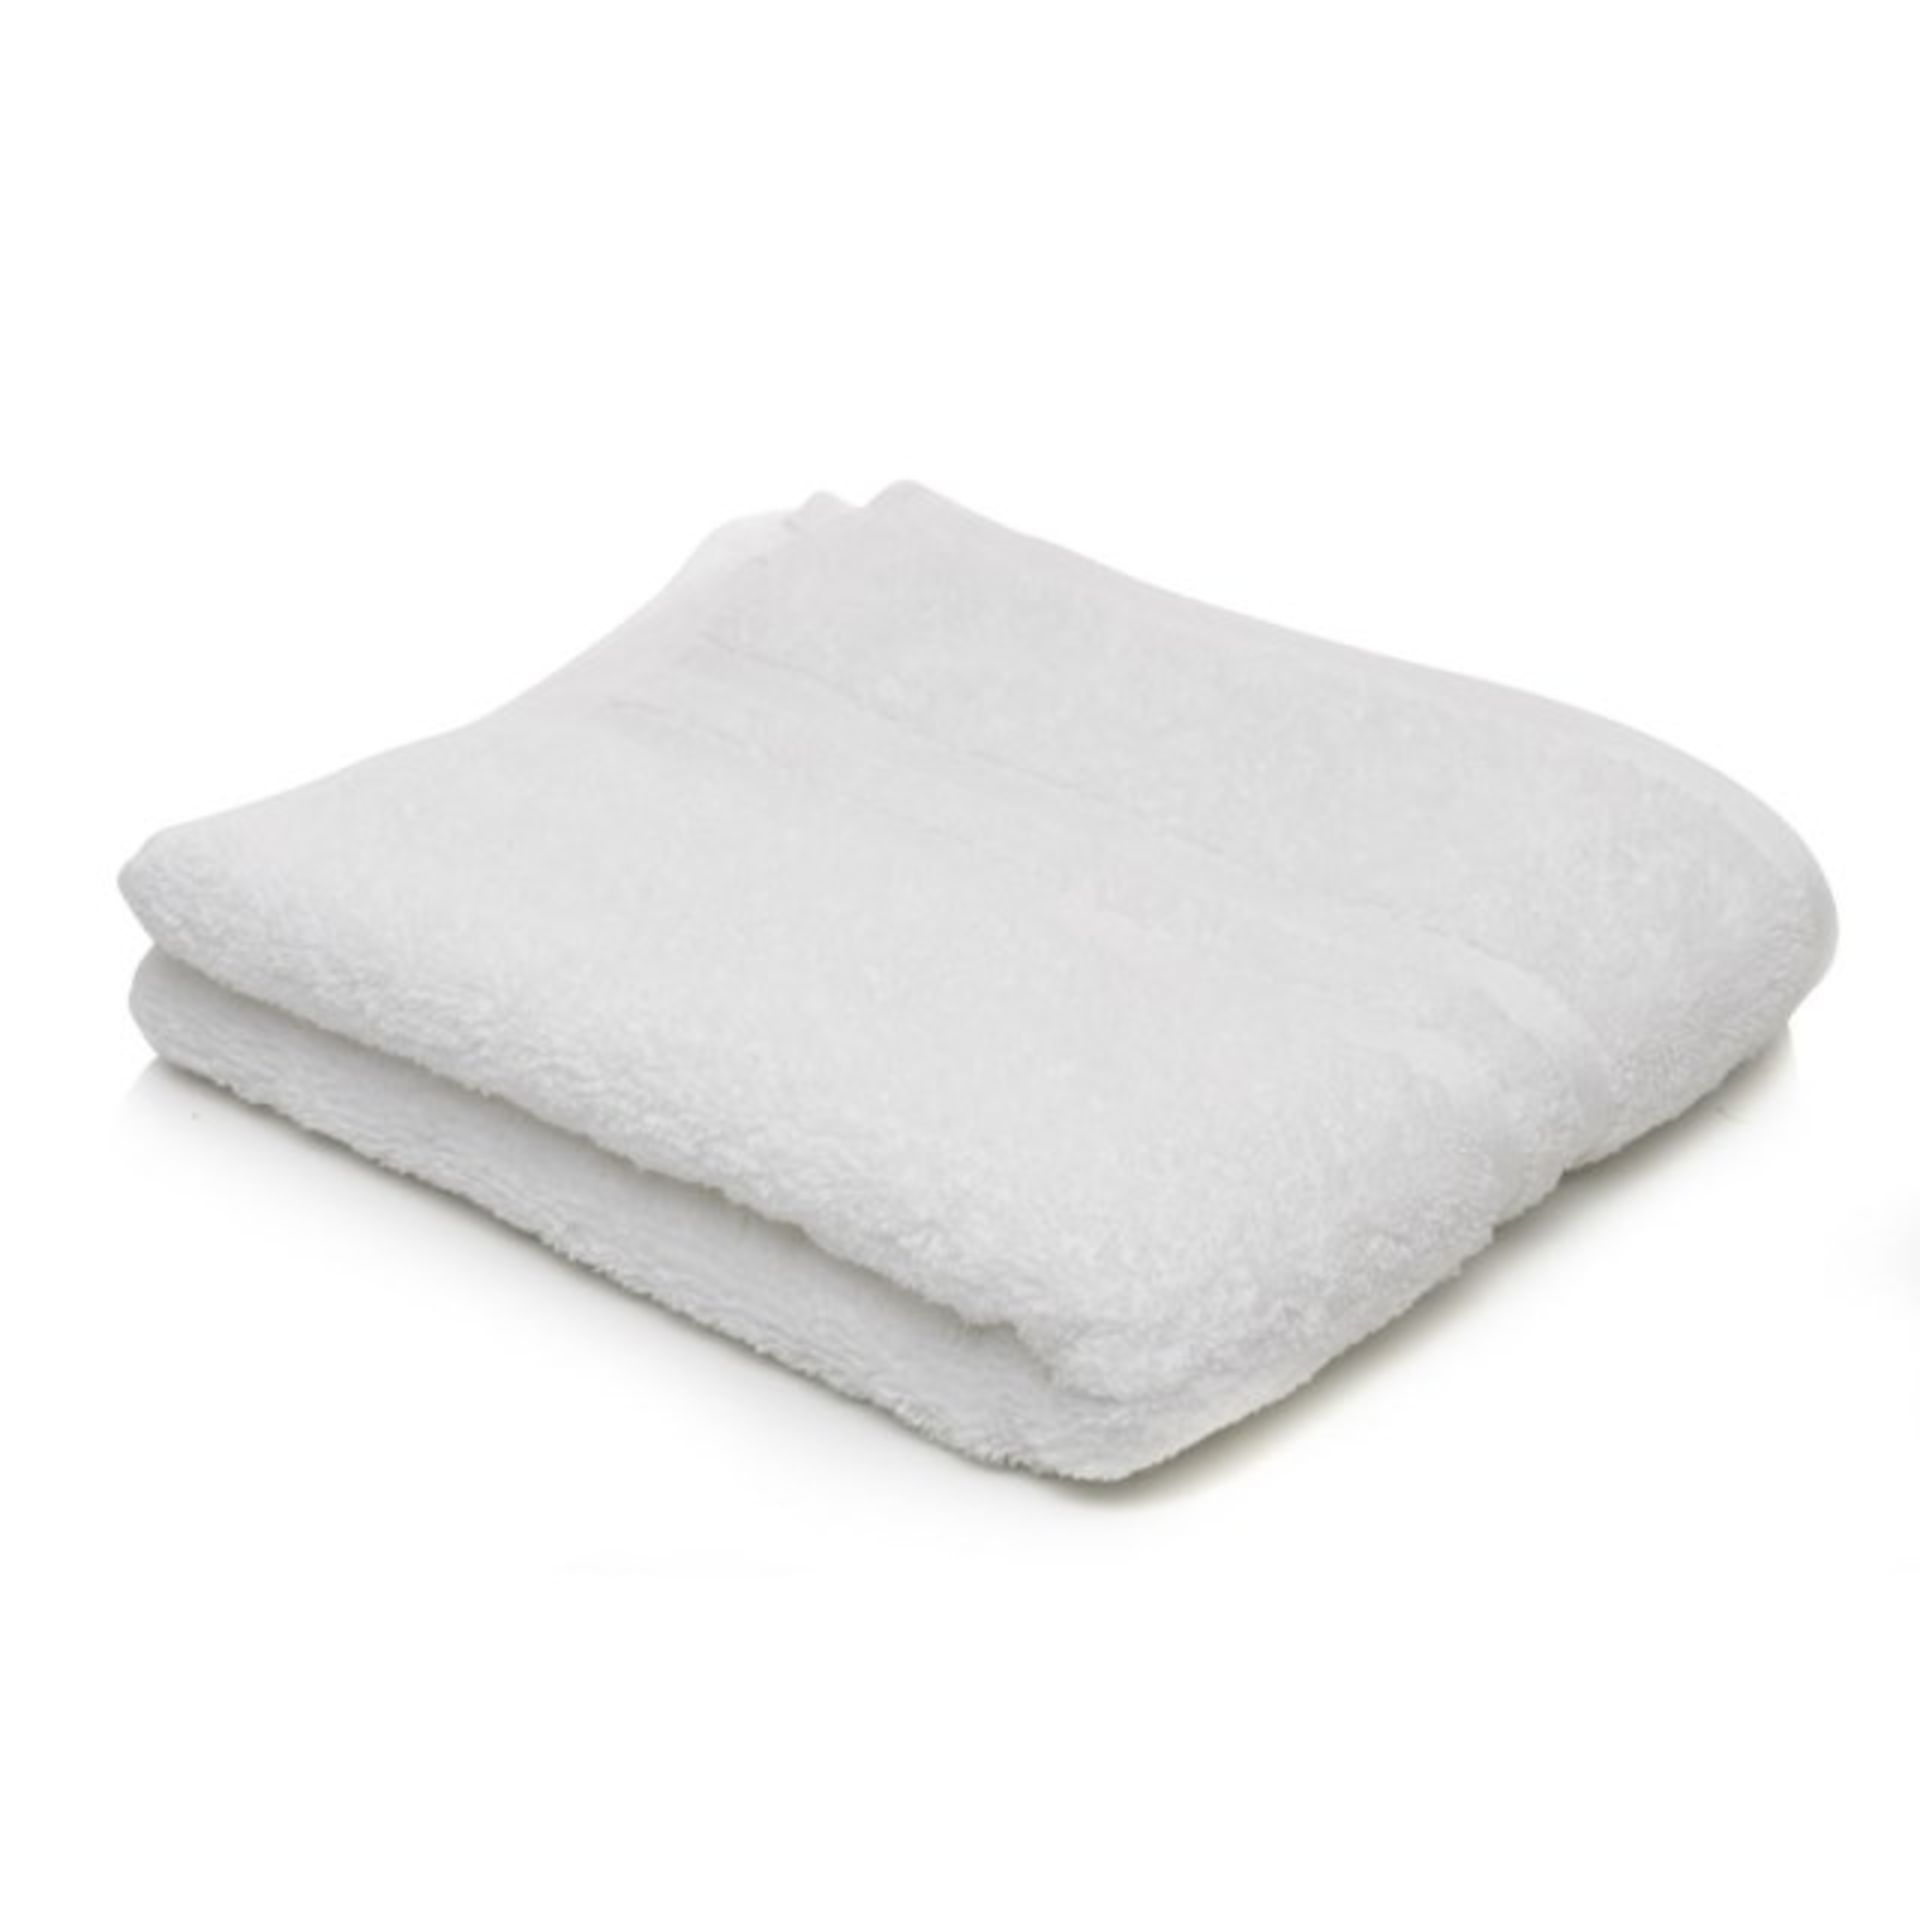 V *TRADE QTY* Brand New Hotel Quality Cotton Bath Towel 70 x 140cm RRP £19.99 X 60 Bid price to be